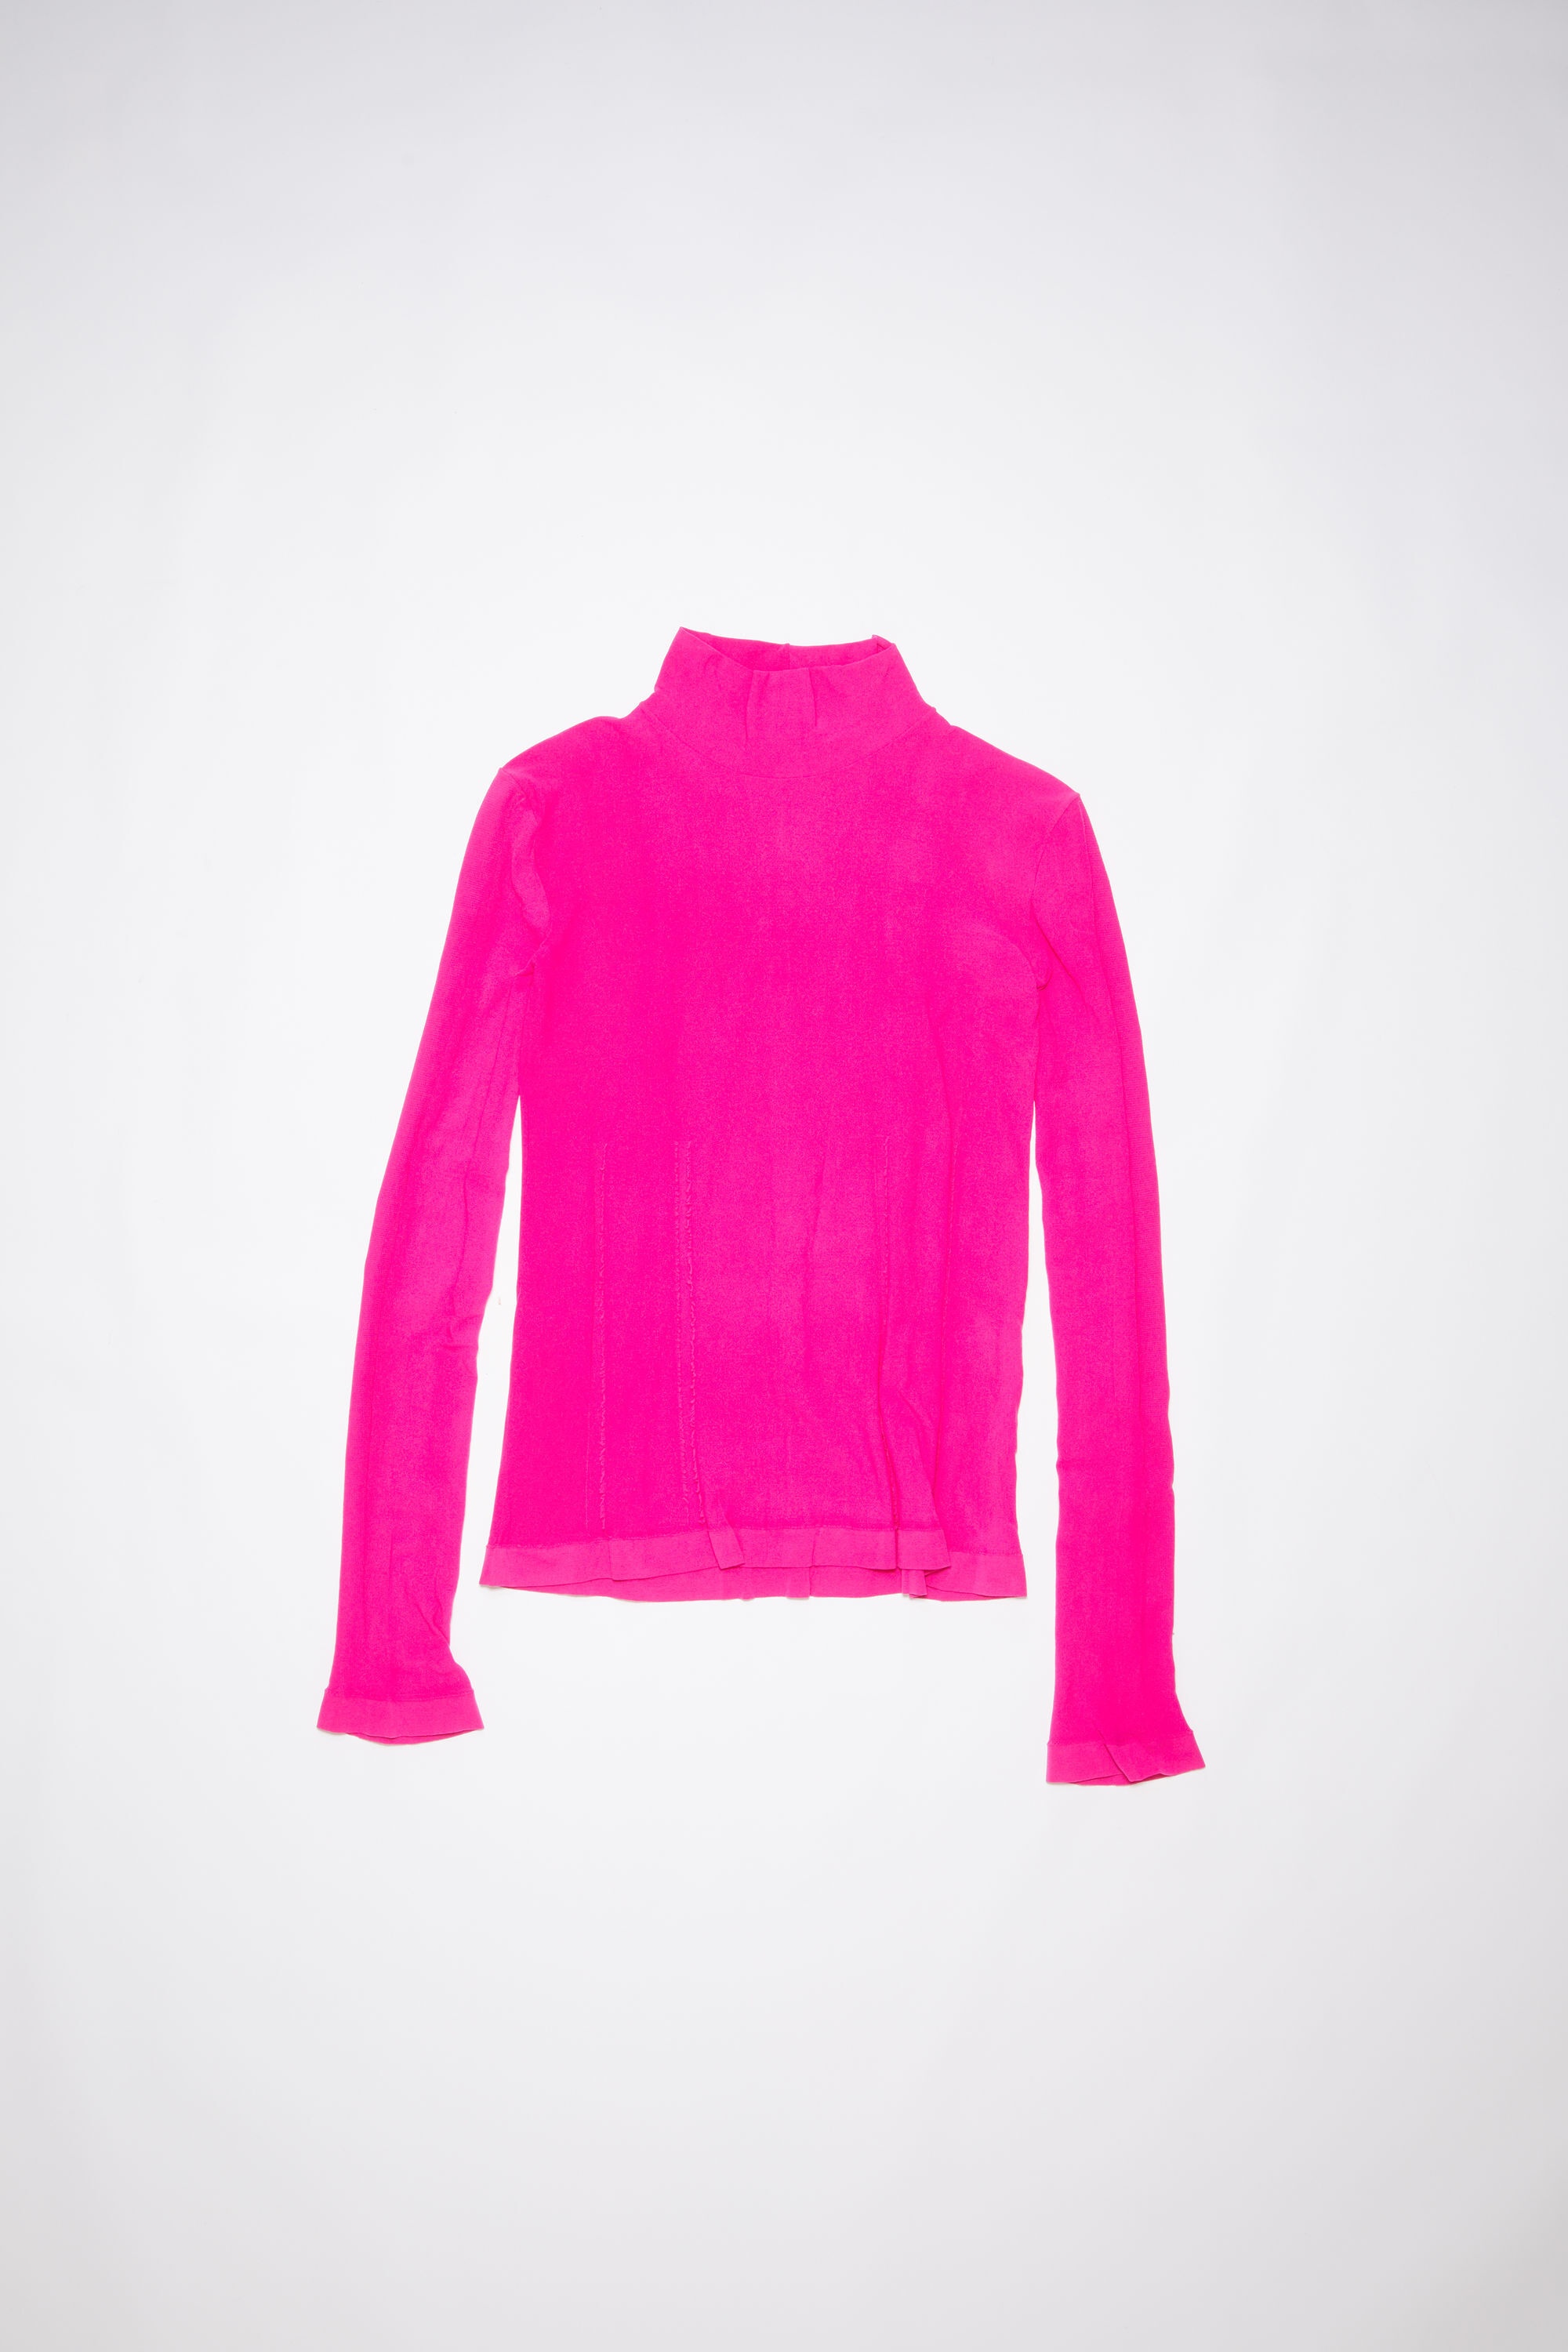 Acne Studios High neck seamless top - Fuchsia pink | REVERSIBLE